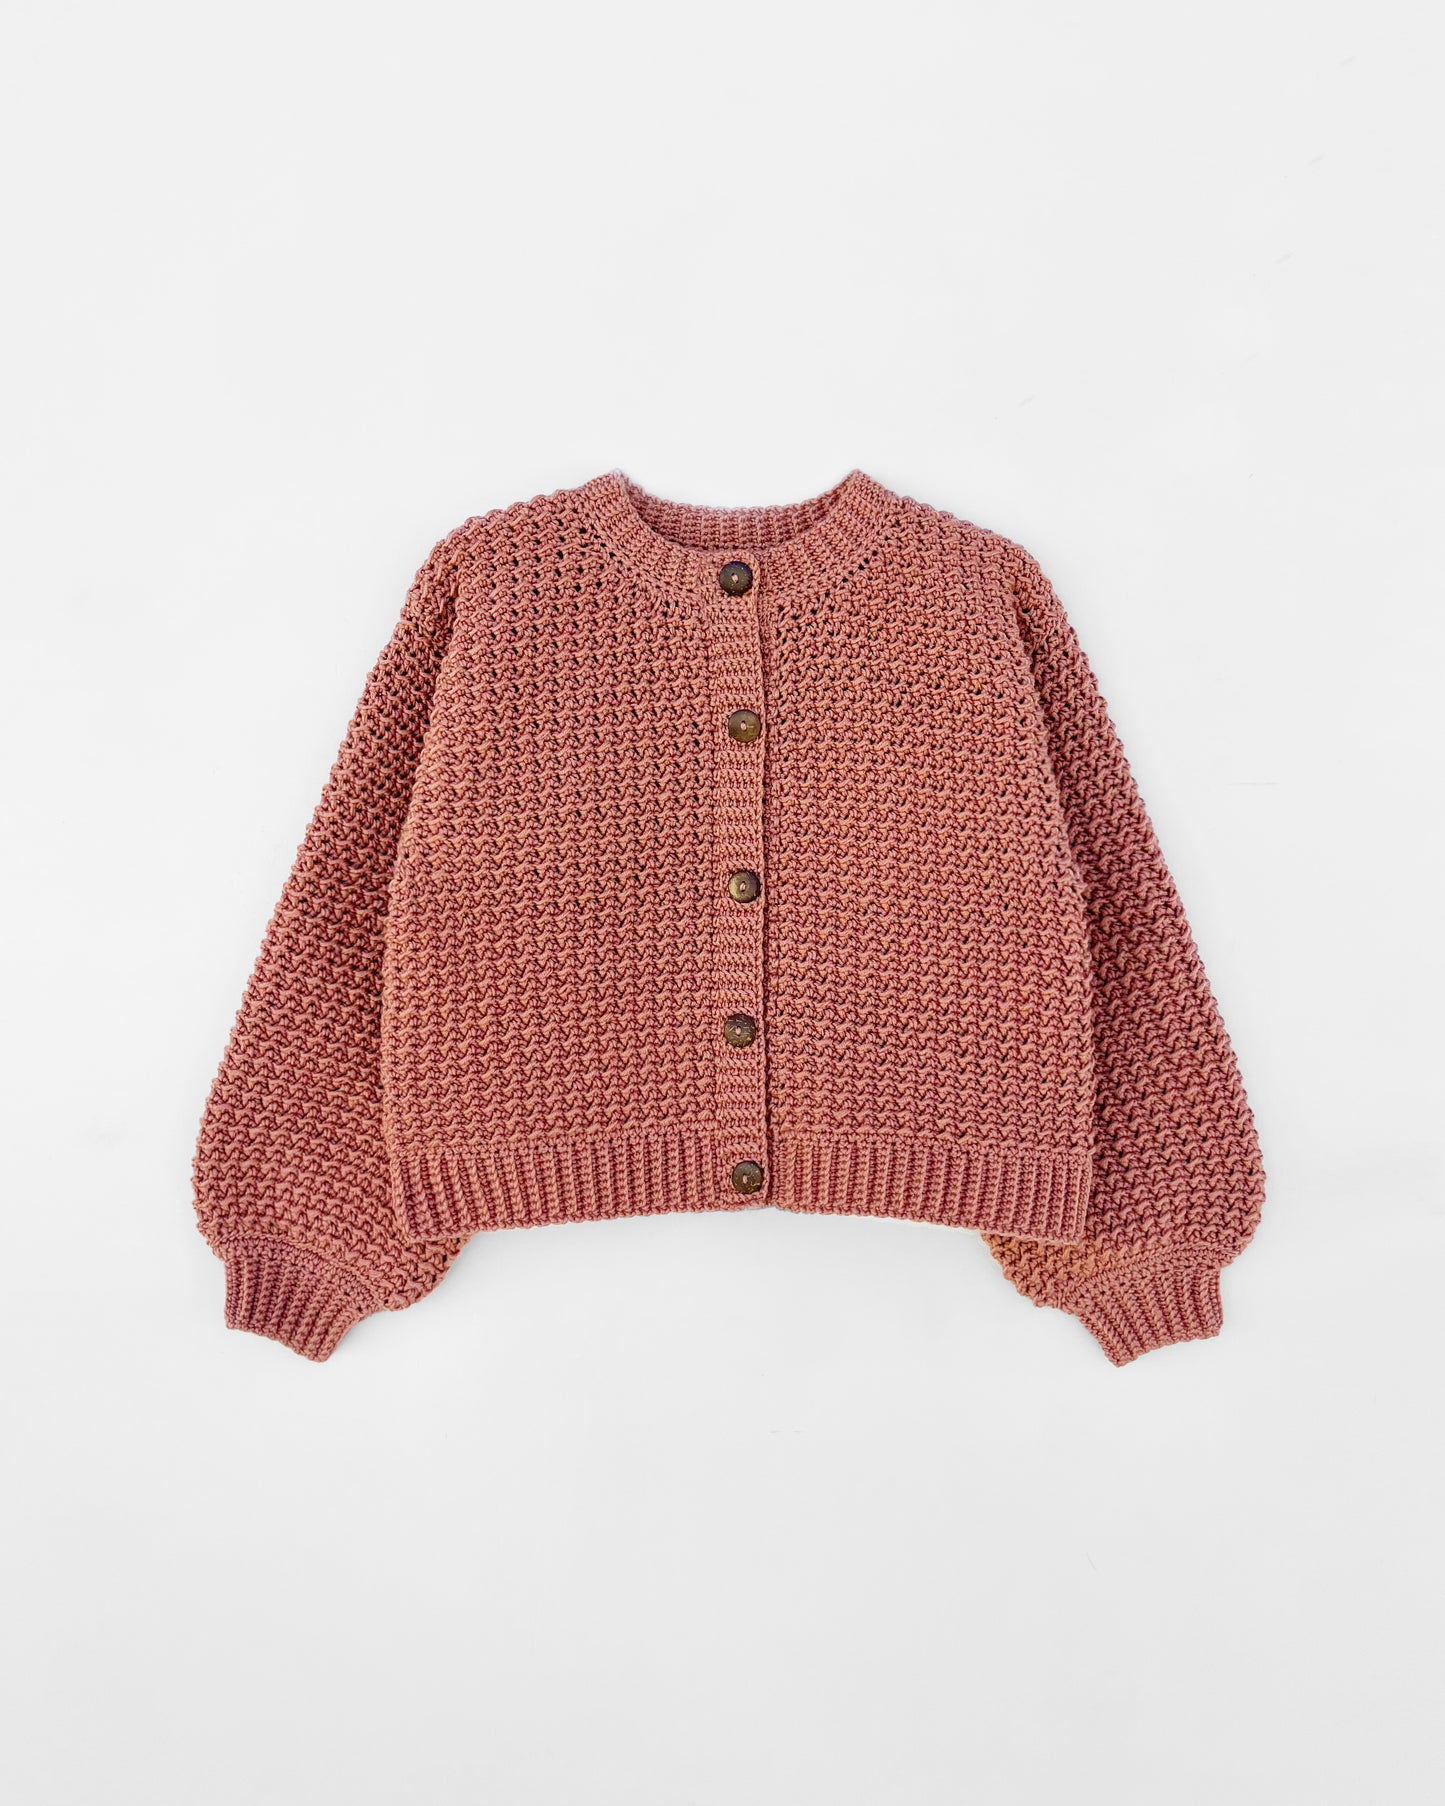 Cardigan No.23 | Easy crochet pattern